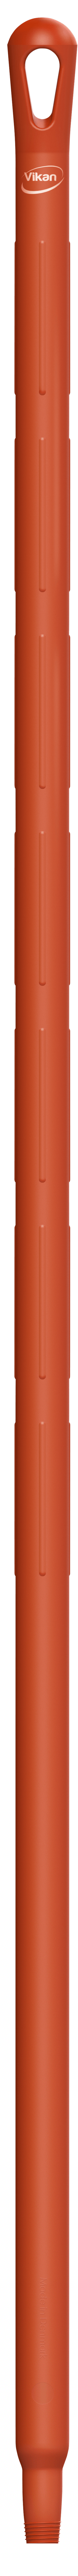 Vikan Ultra Hygiene Steel 1500mm 29624 rood